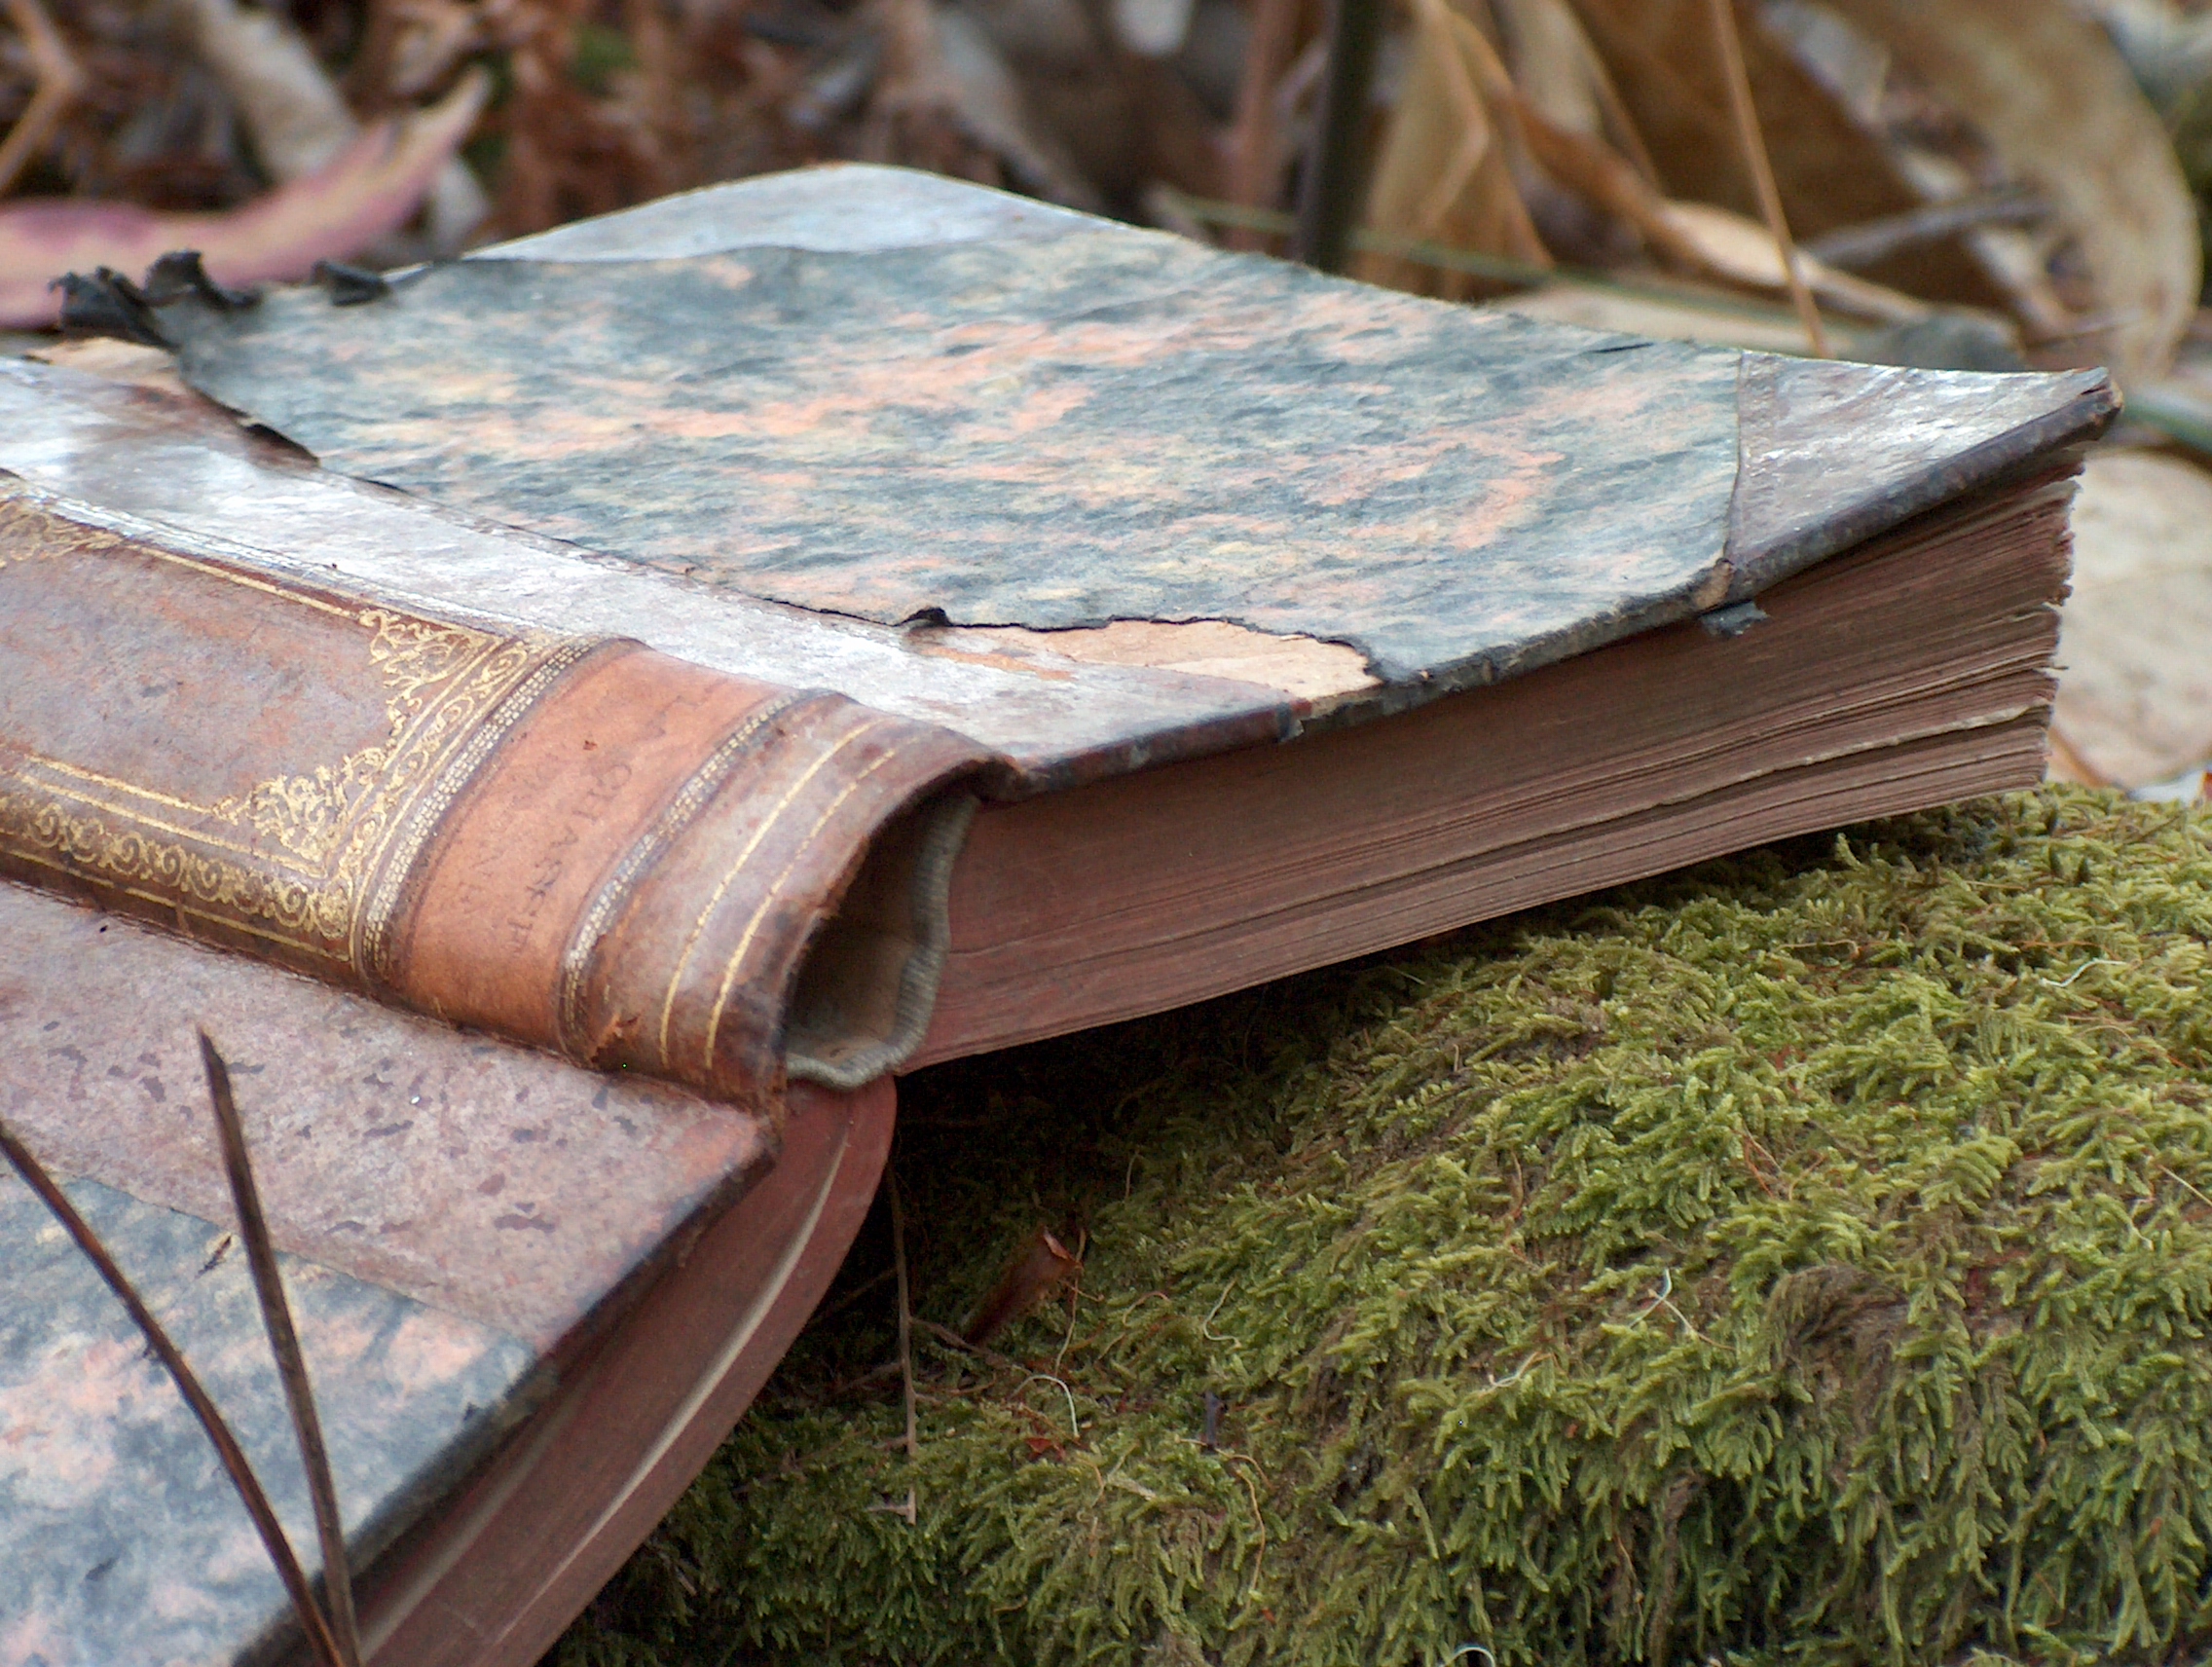 Book in Woods 1